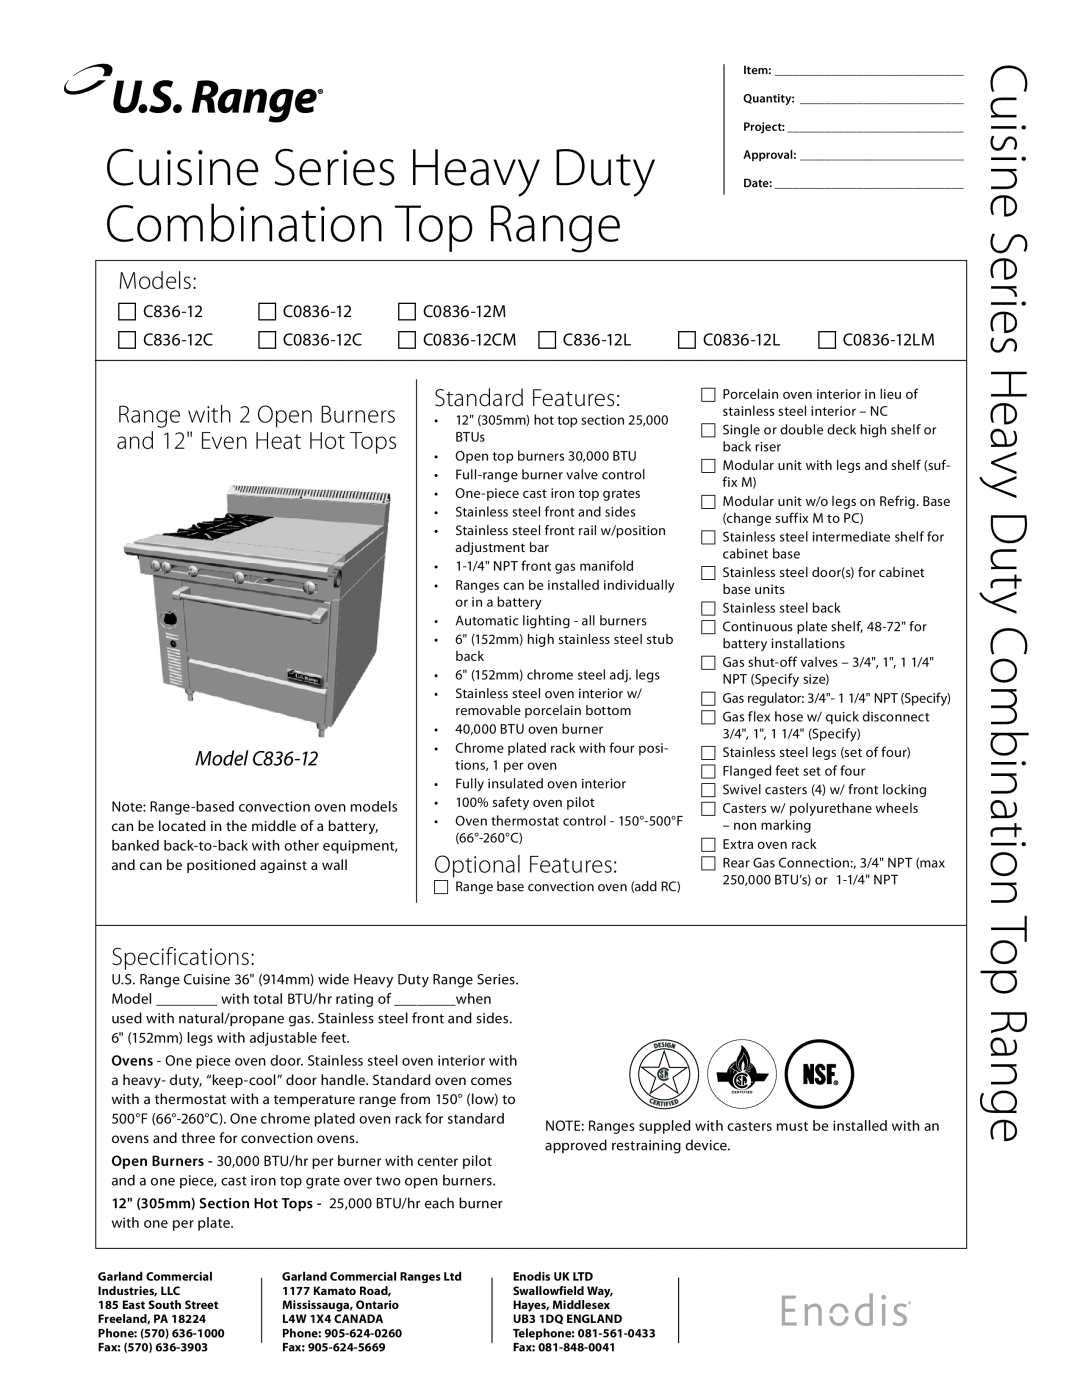 Garland C836-12L, C836-12C specifications Combination Top Range, Heavy Duty Combination, Cuisine Series Heavy Duty, Models 